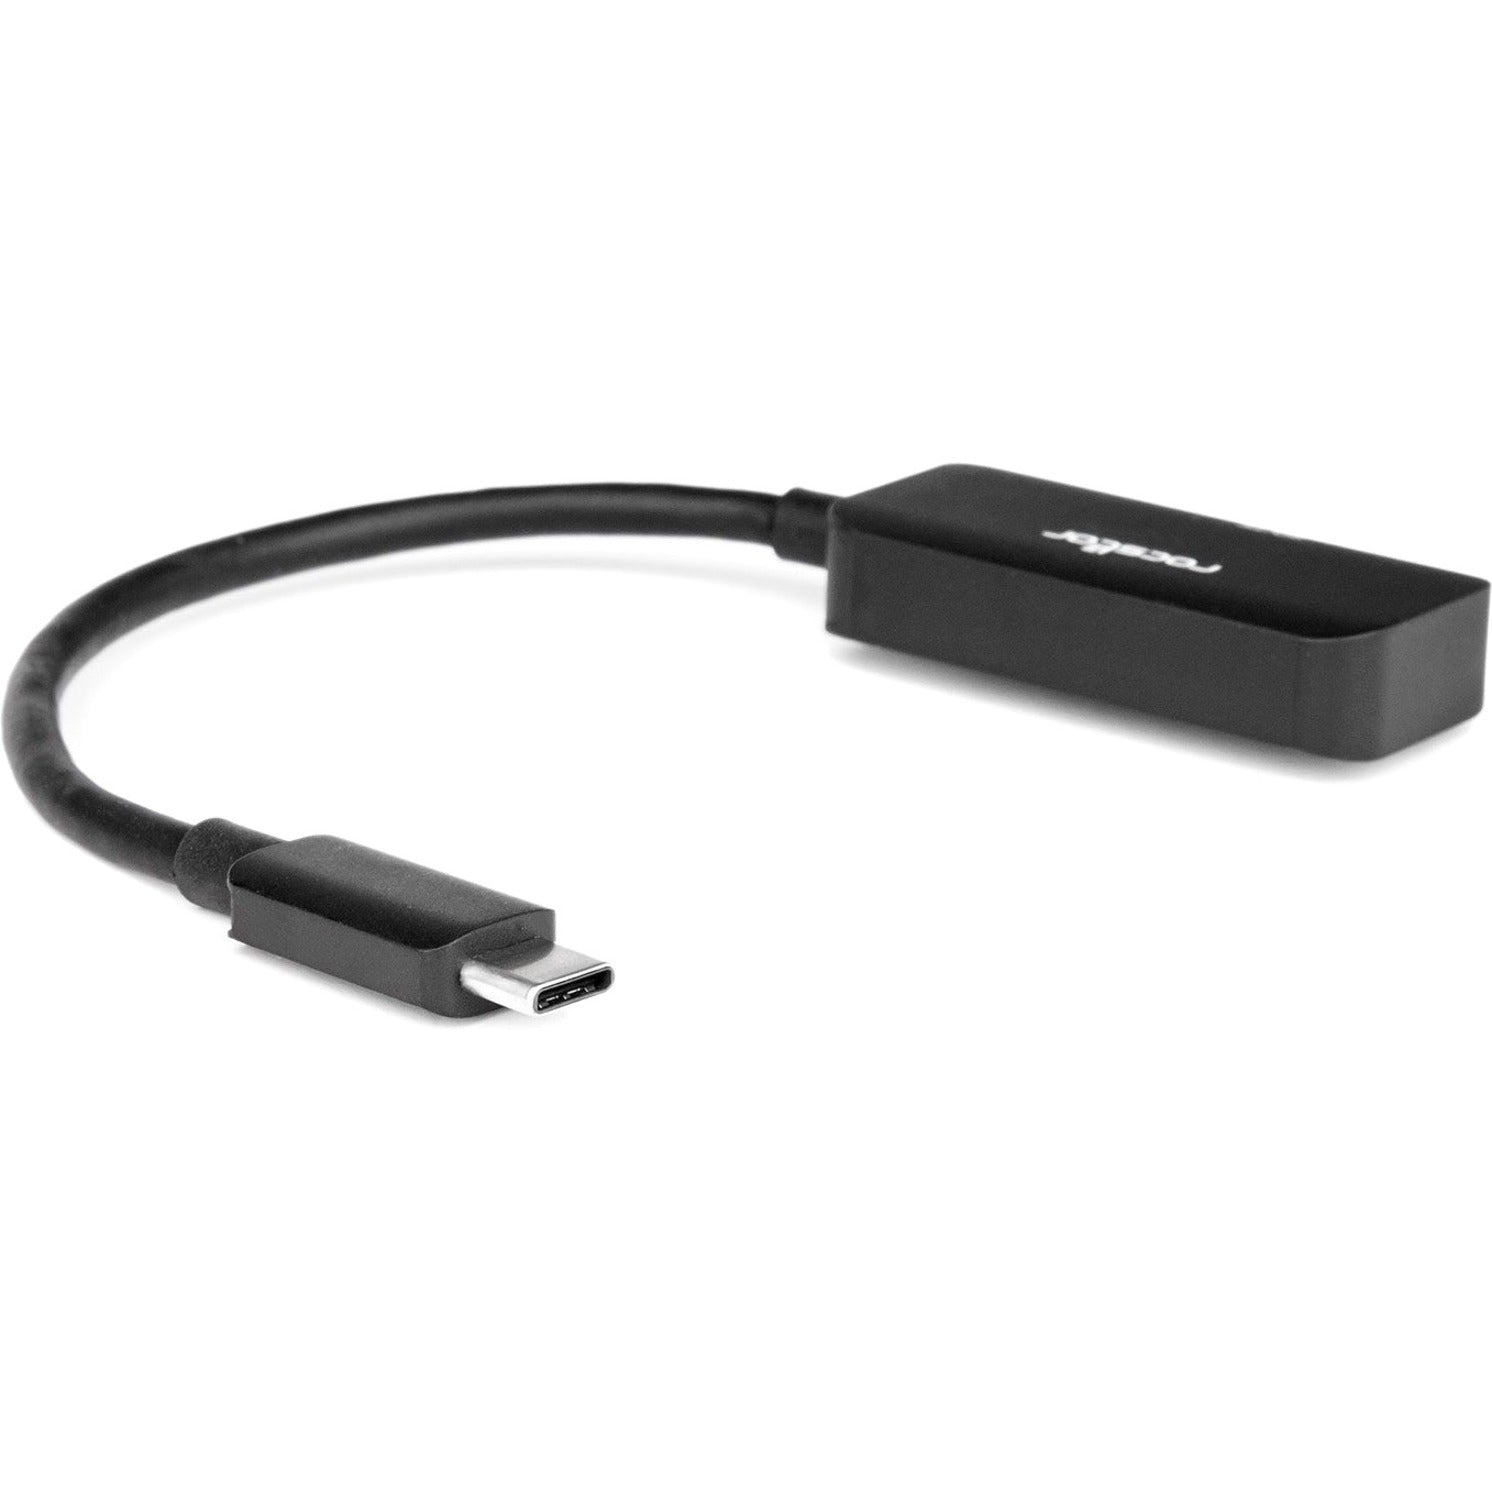 Rocstor Y10A252-B1 Premium USB-C Multi Media Memory Card Reader, Thunderbolt, 2 Year Warranty